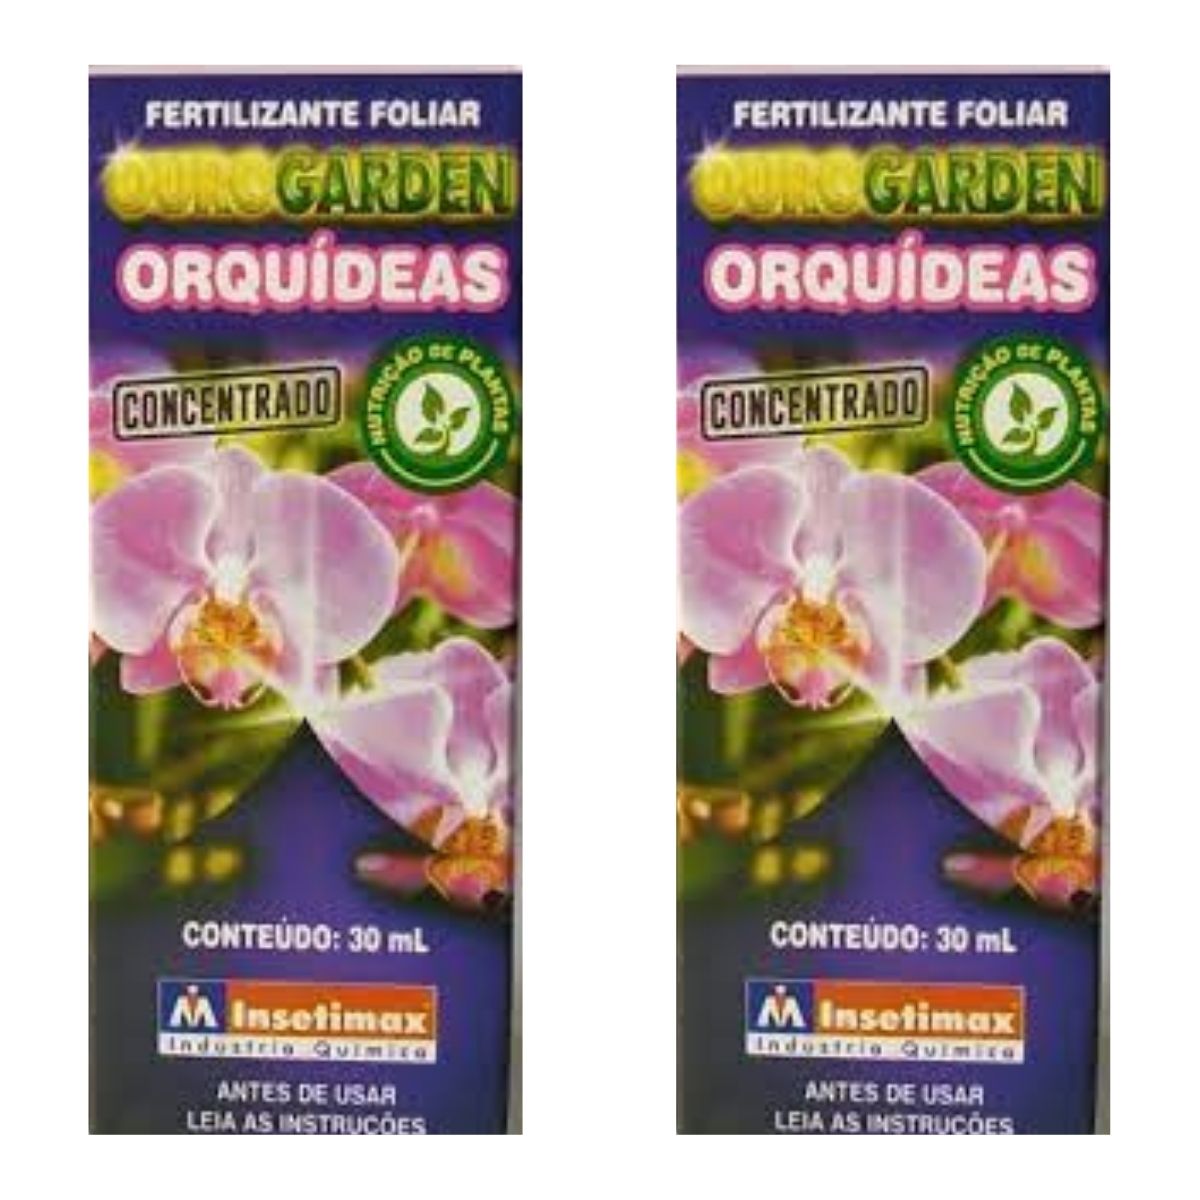 Fertilizante adubo  para orquídeas concentrado  kit com 2 unidades